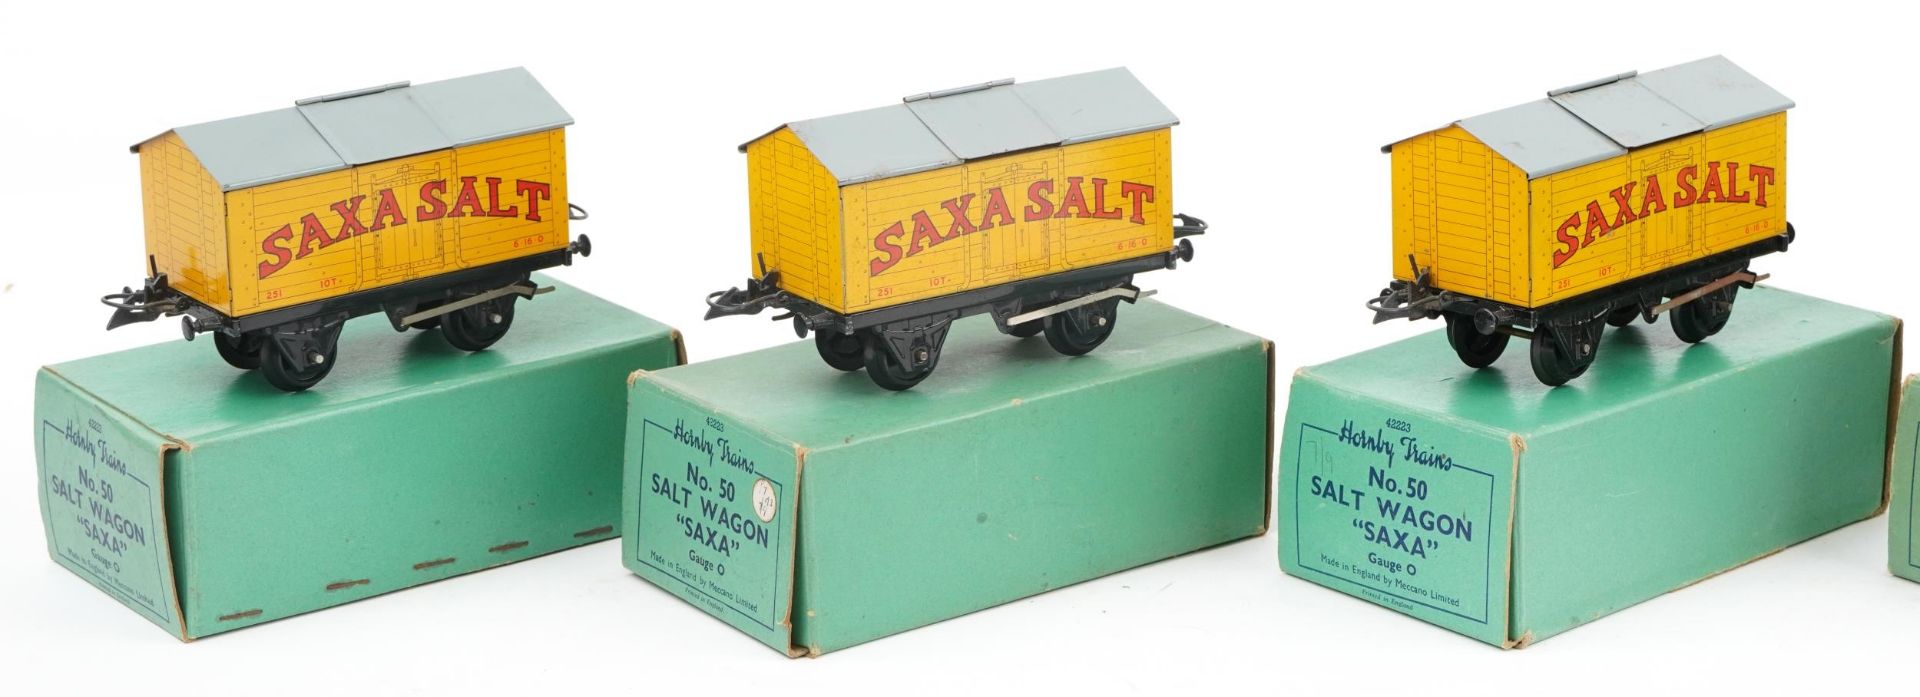 Six Hornby O gauge tinplate model railway no 50 Saxa salt wagons with boxes - Image 2 of 5